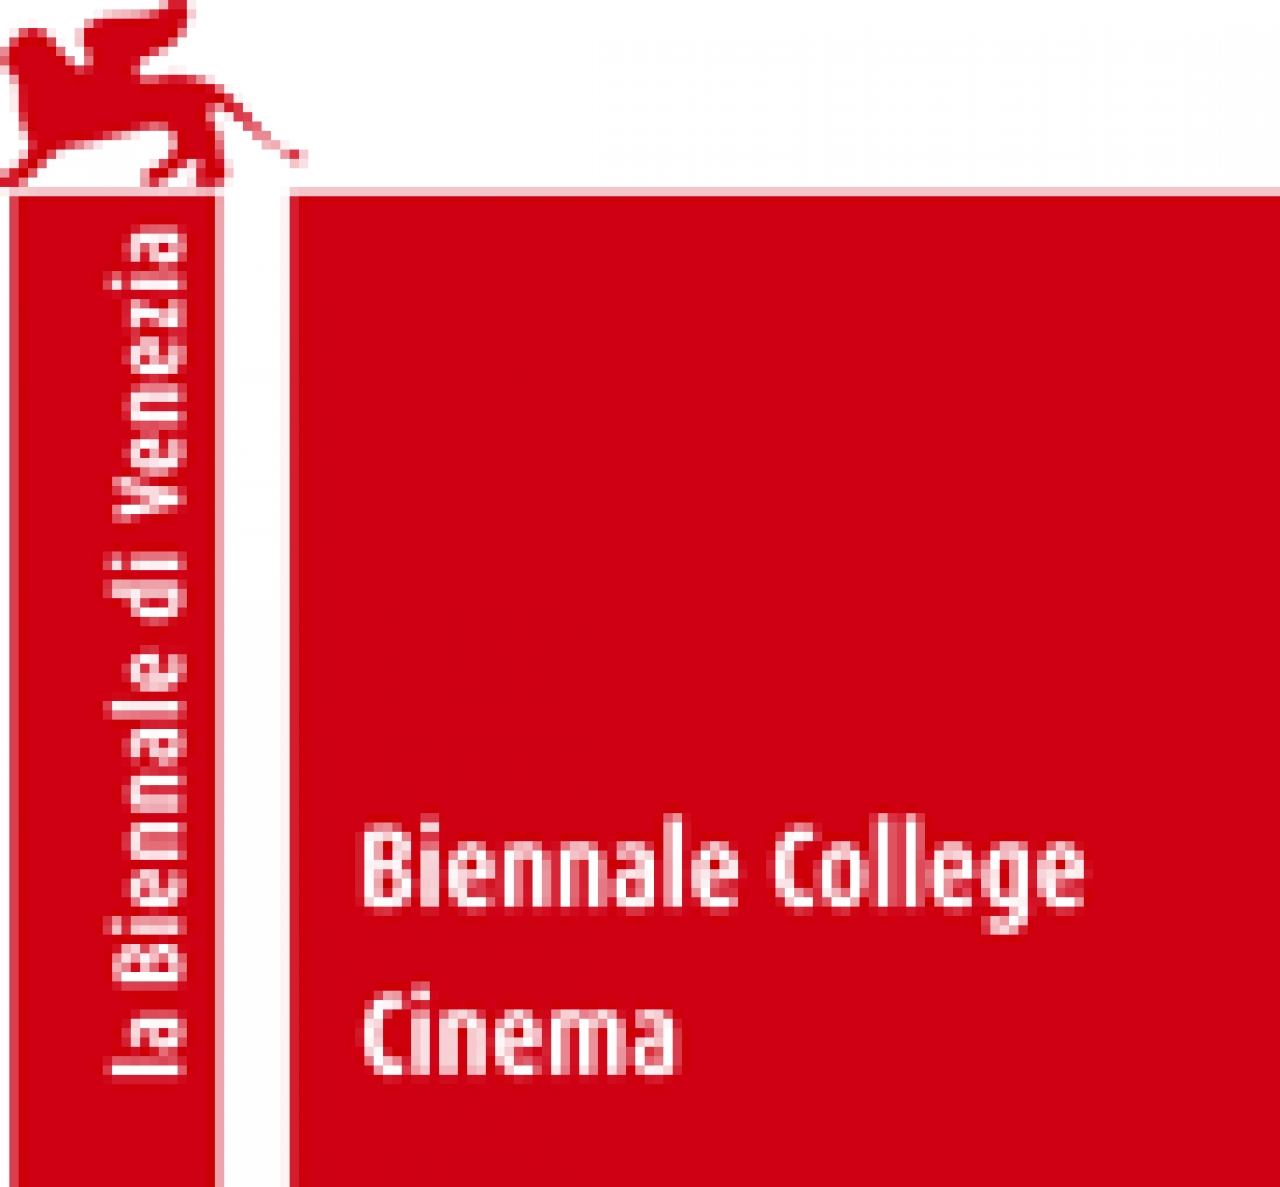 Biennale College Cinema - Virtual Reality